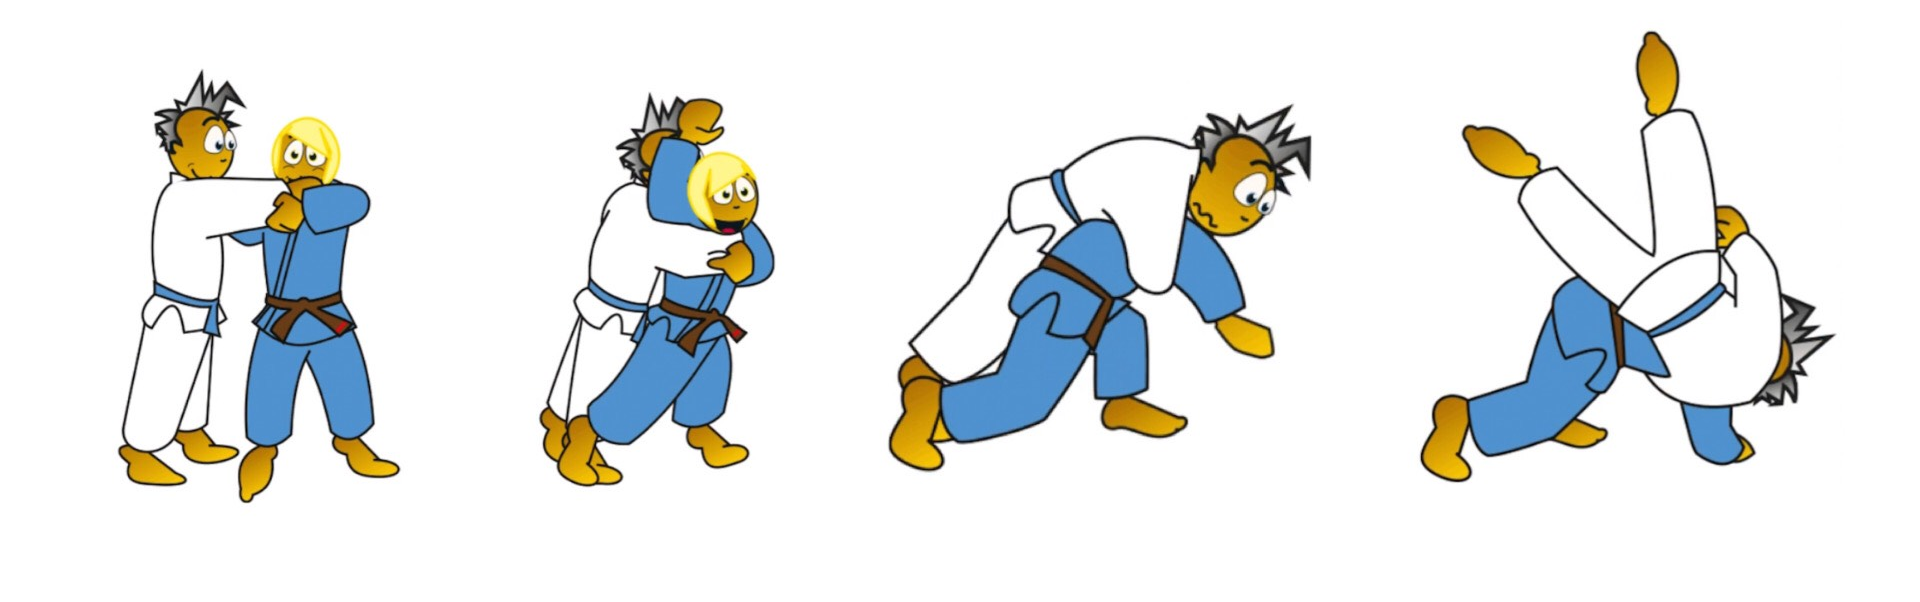 Kĩ thuật trong Judo